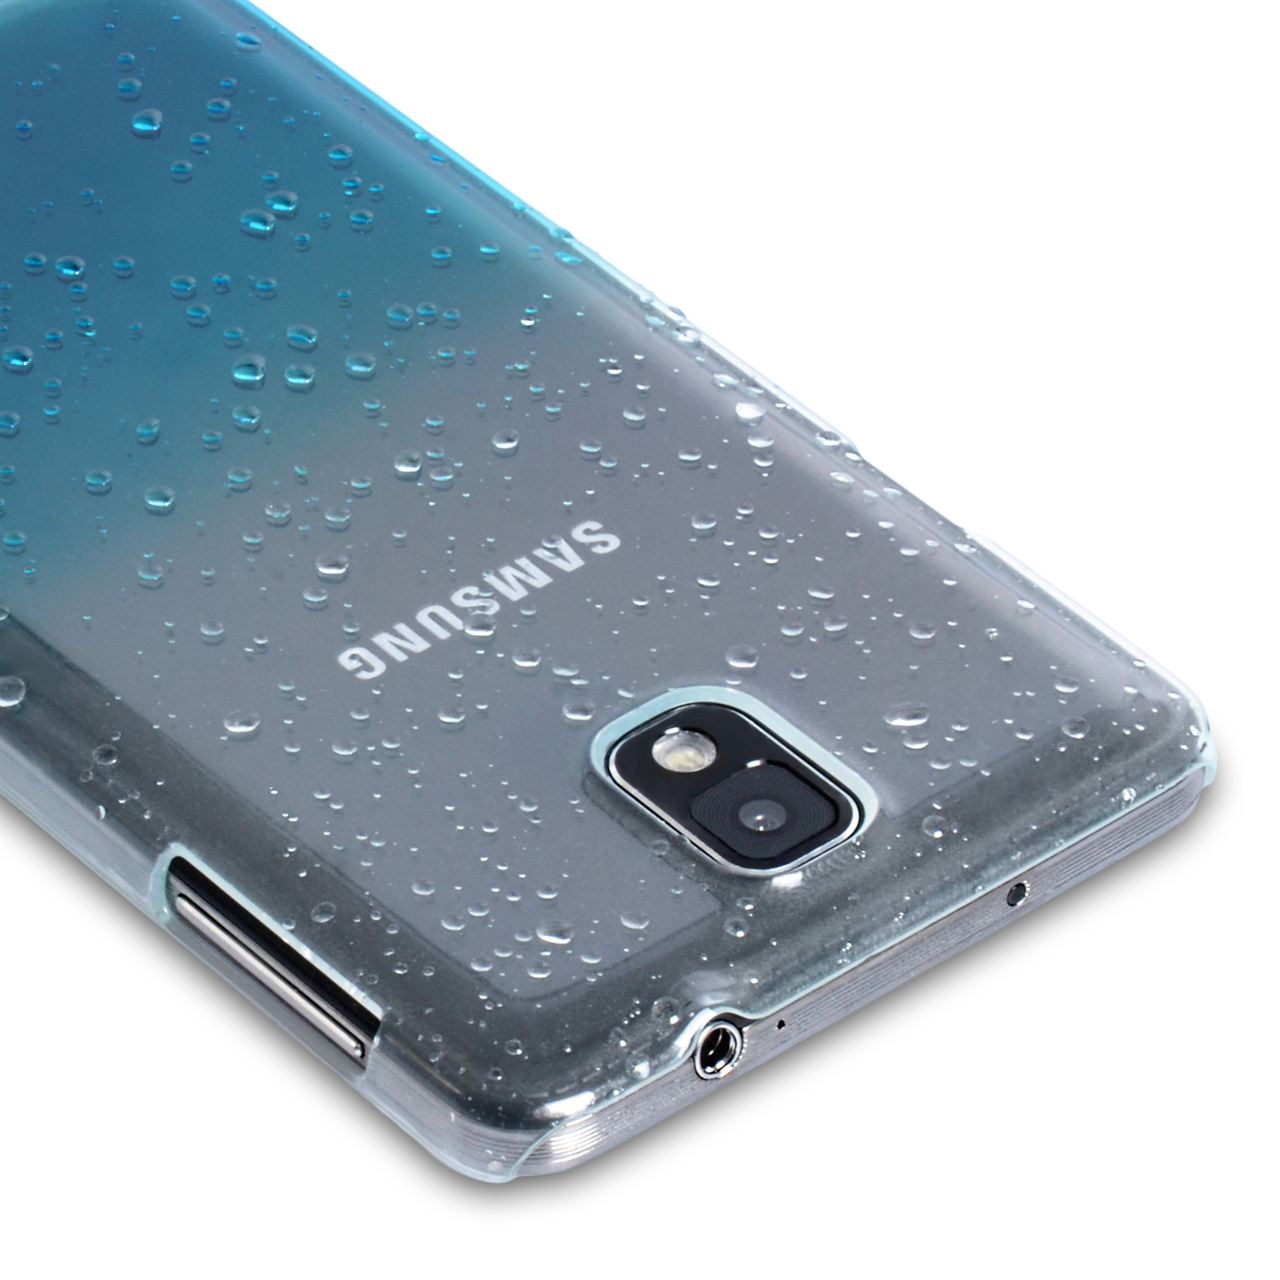 YouSave Accessories Samsung Galaxy Note 3 Waterdrop Hard Case - Blue